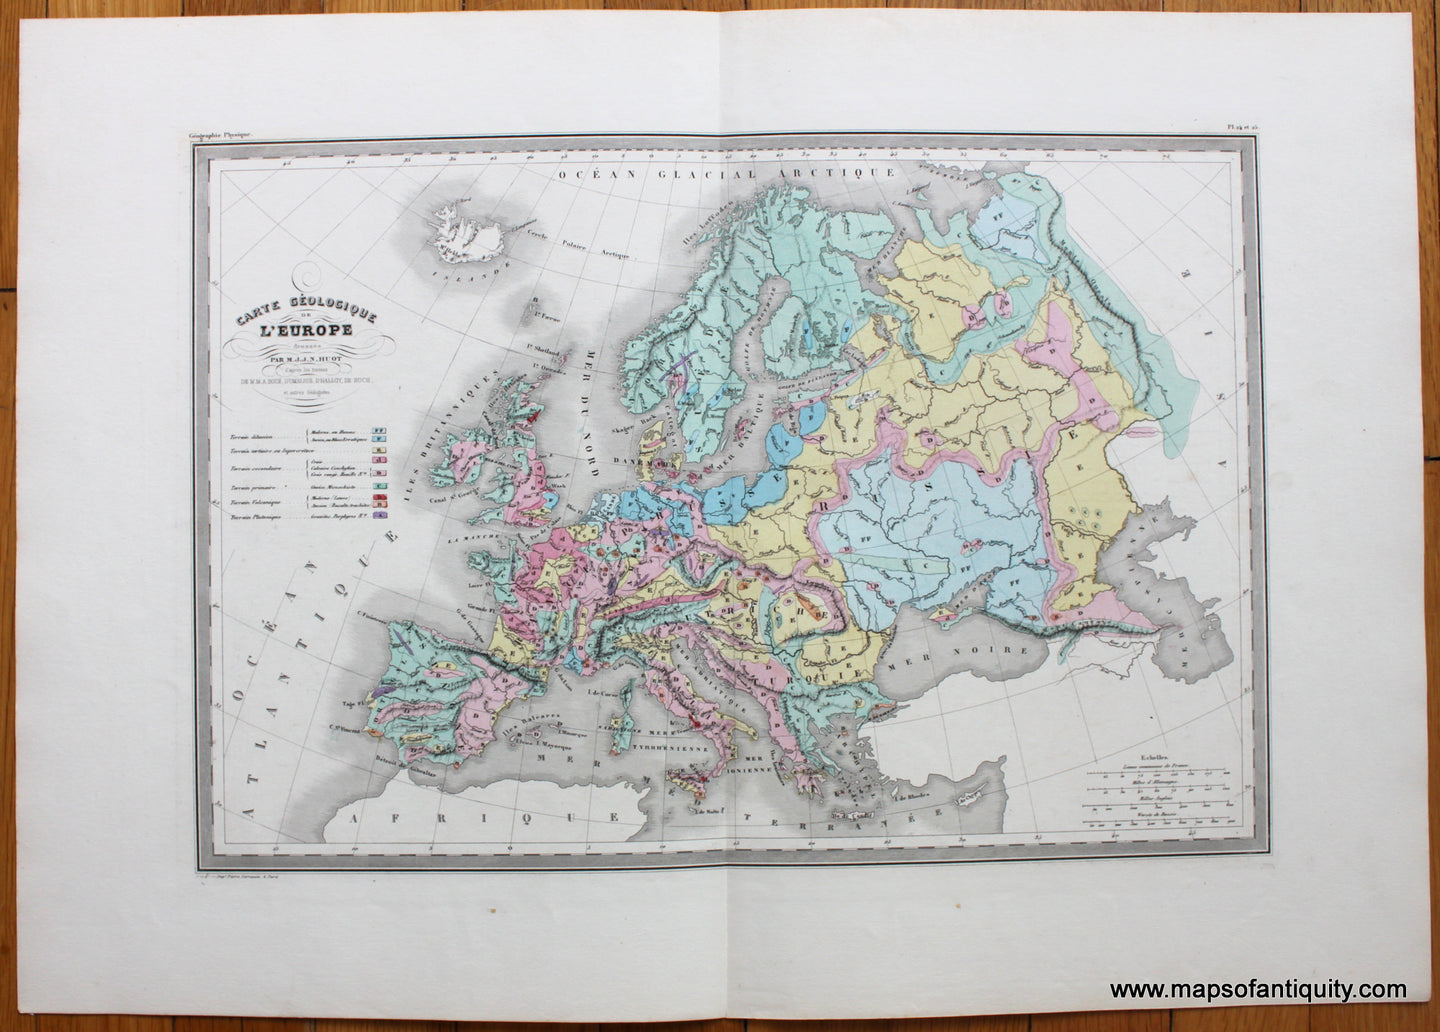 Antique-Hand-Colored-Map-Carte-Geologique-de-l'Europe-Europe-Europe-General-1860-M.-Malte-Brun-Maps-Of-Antiquity